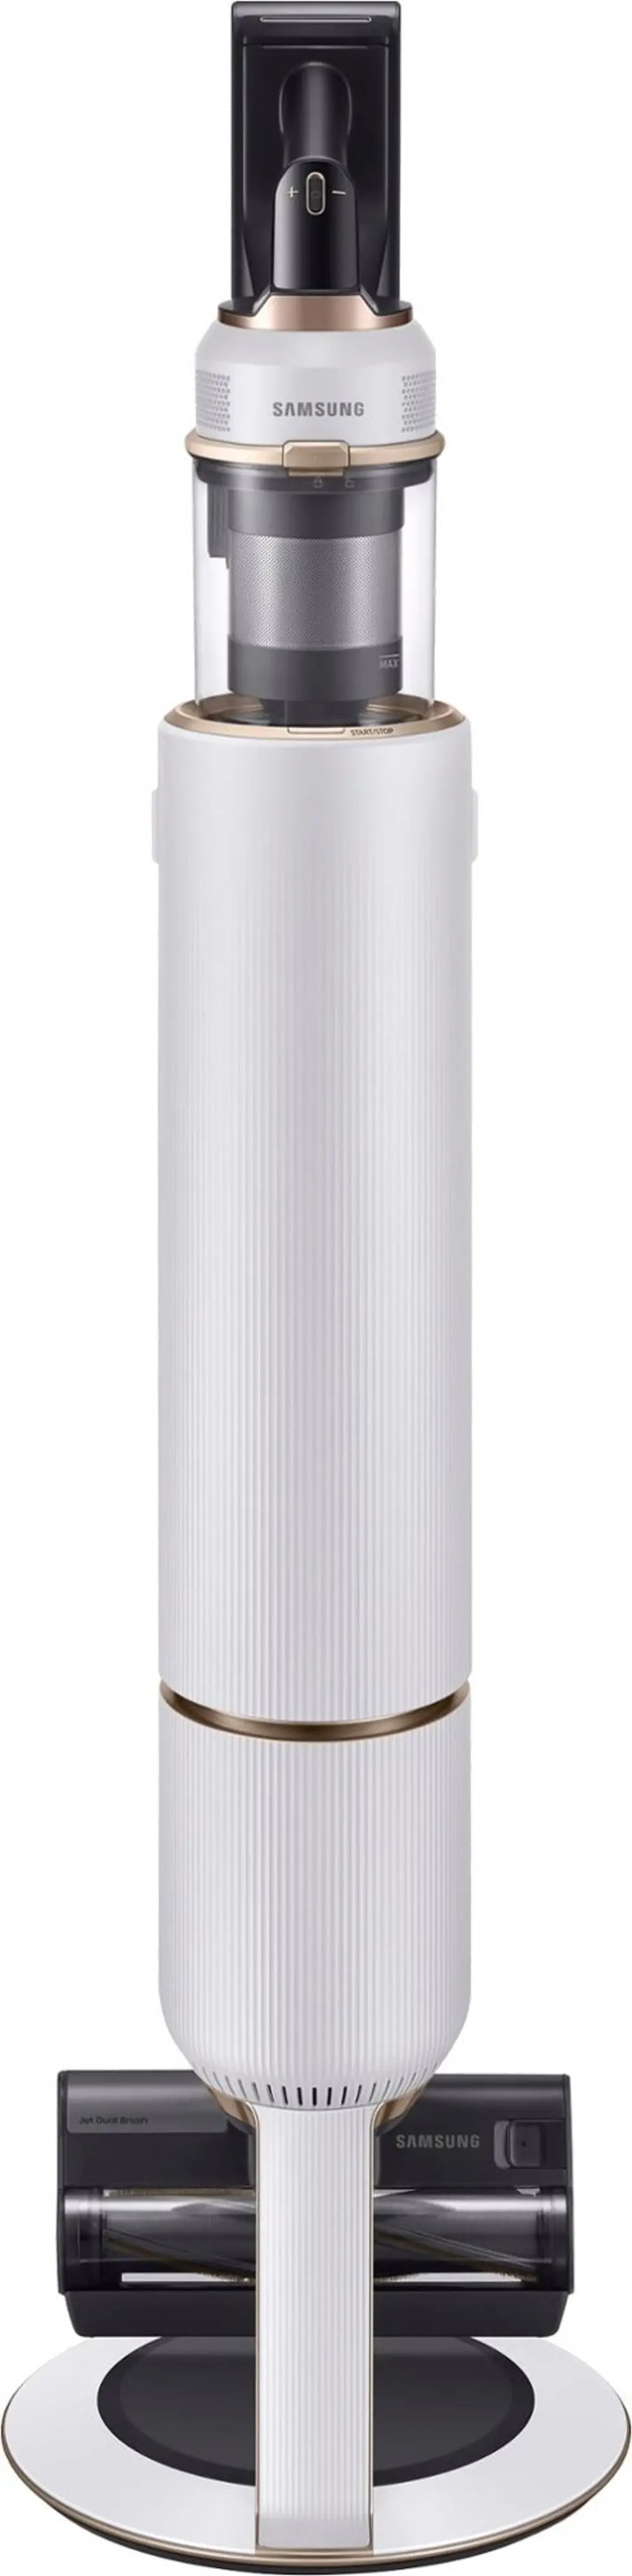 VS20A9580VW/AA Samsung BESPOKE Jet Cordless Stick Vacuum - Misty White-1